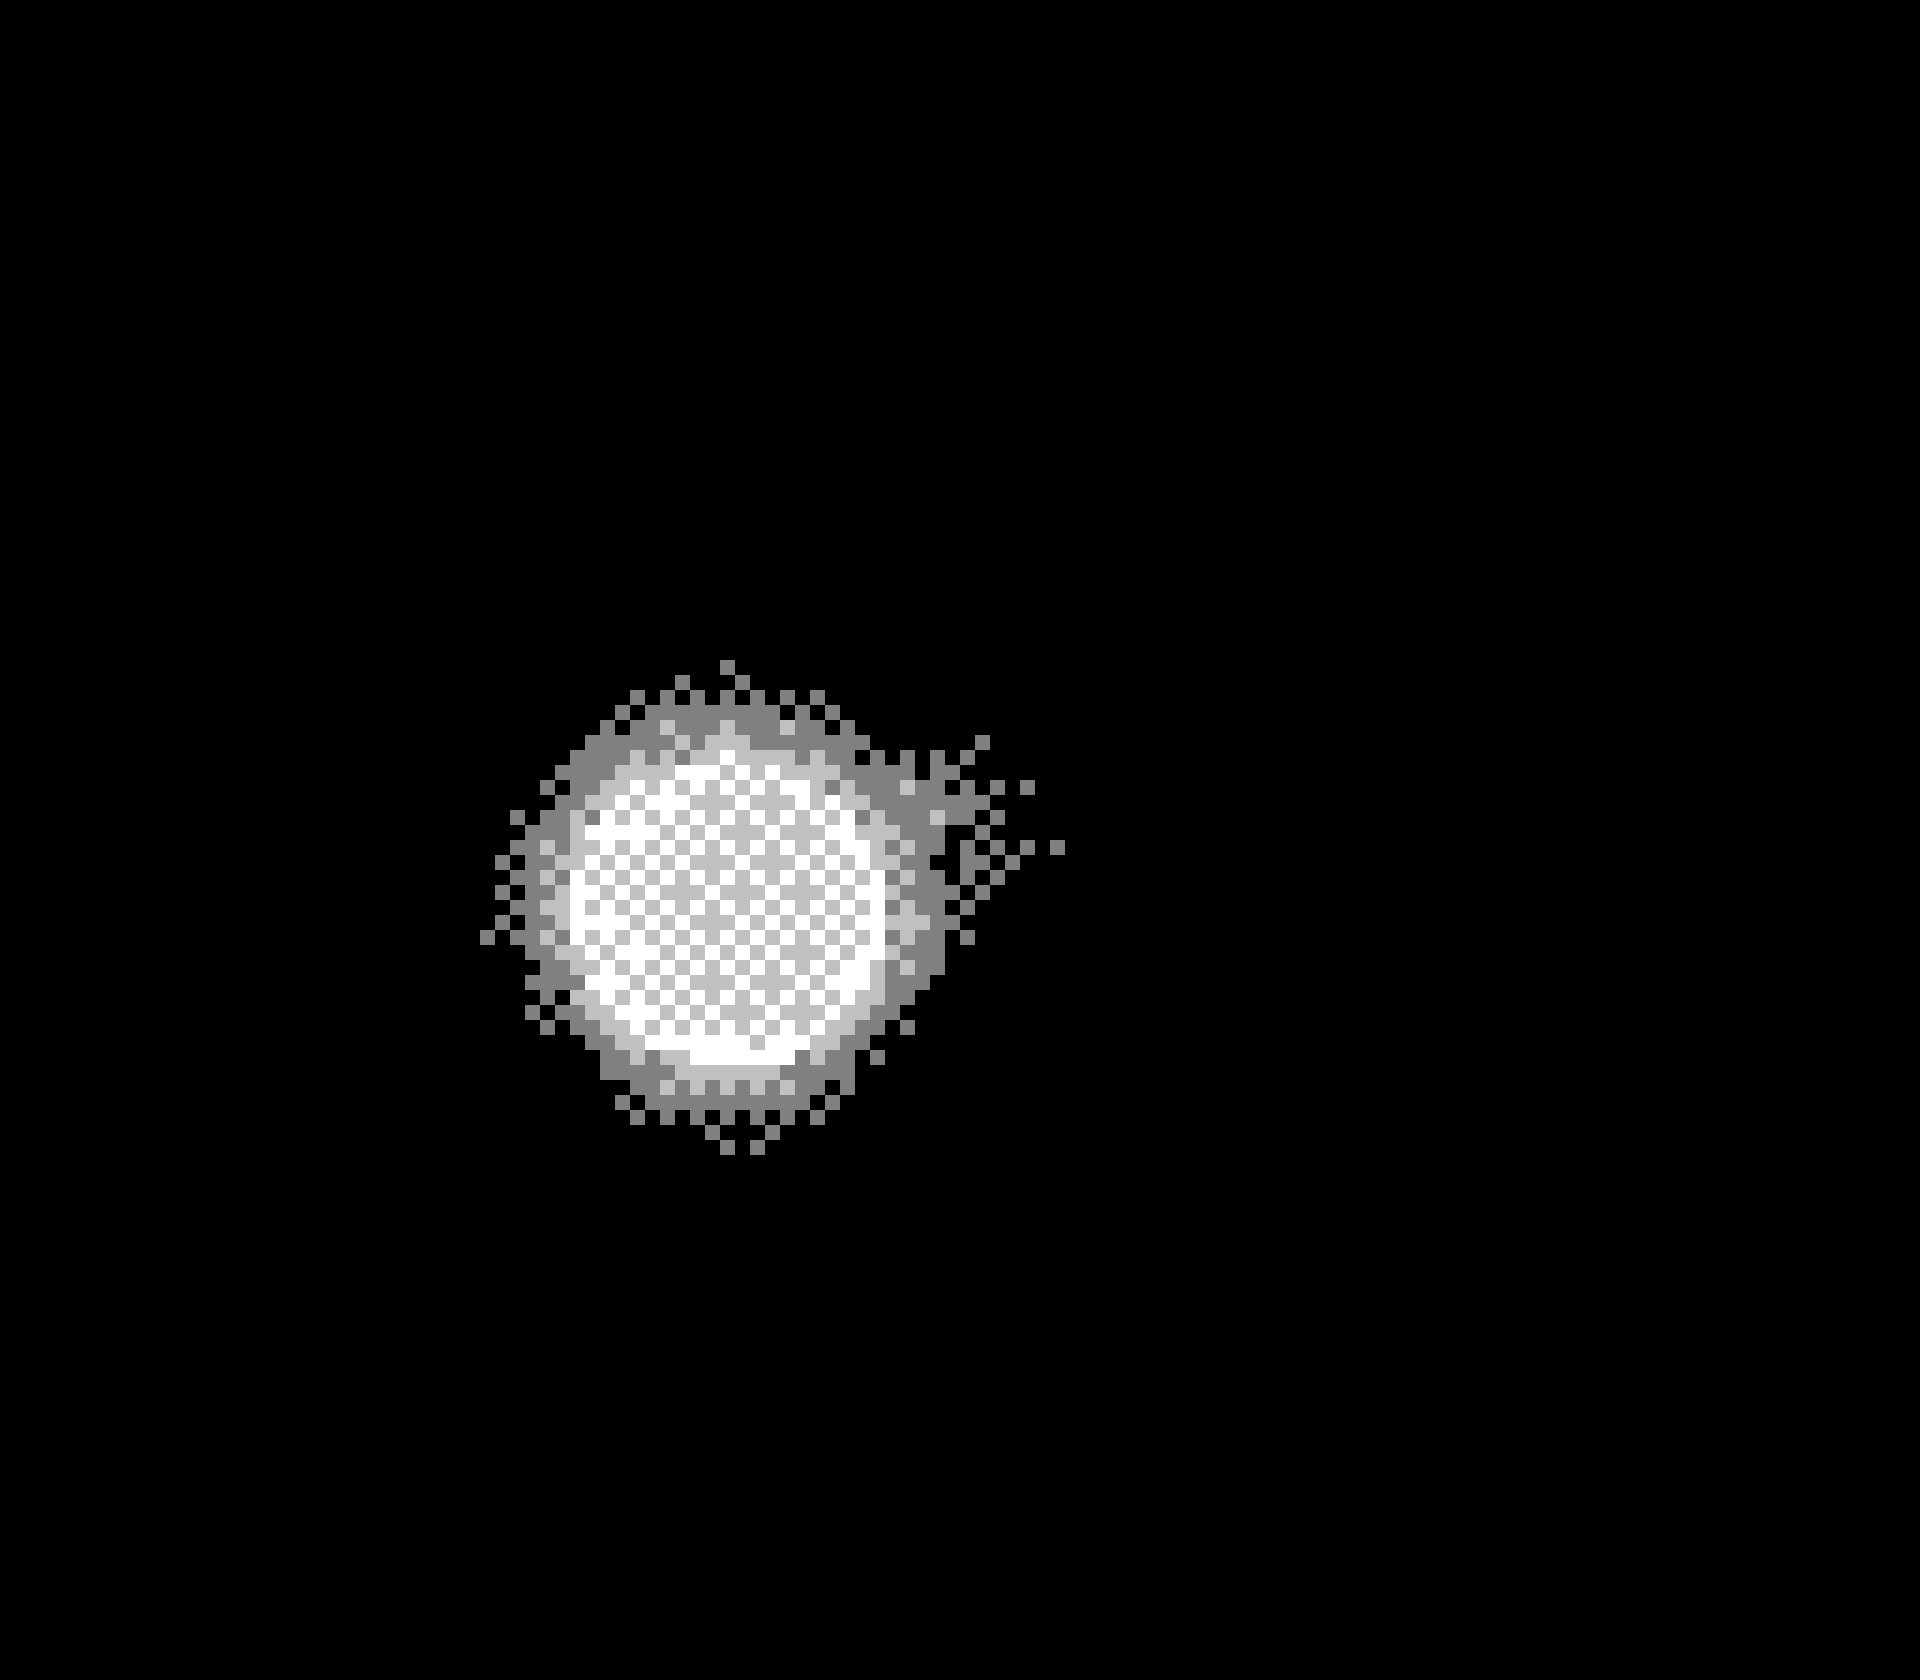  "Solar Track #02: 09/06/2017, 4:10pm" BMP Image, 128x112 Pixels, 2017. 